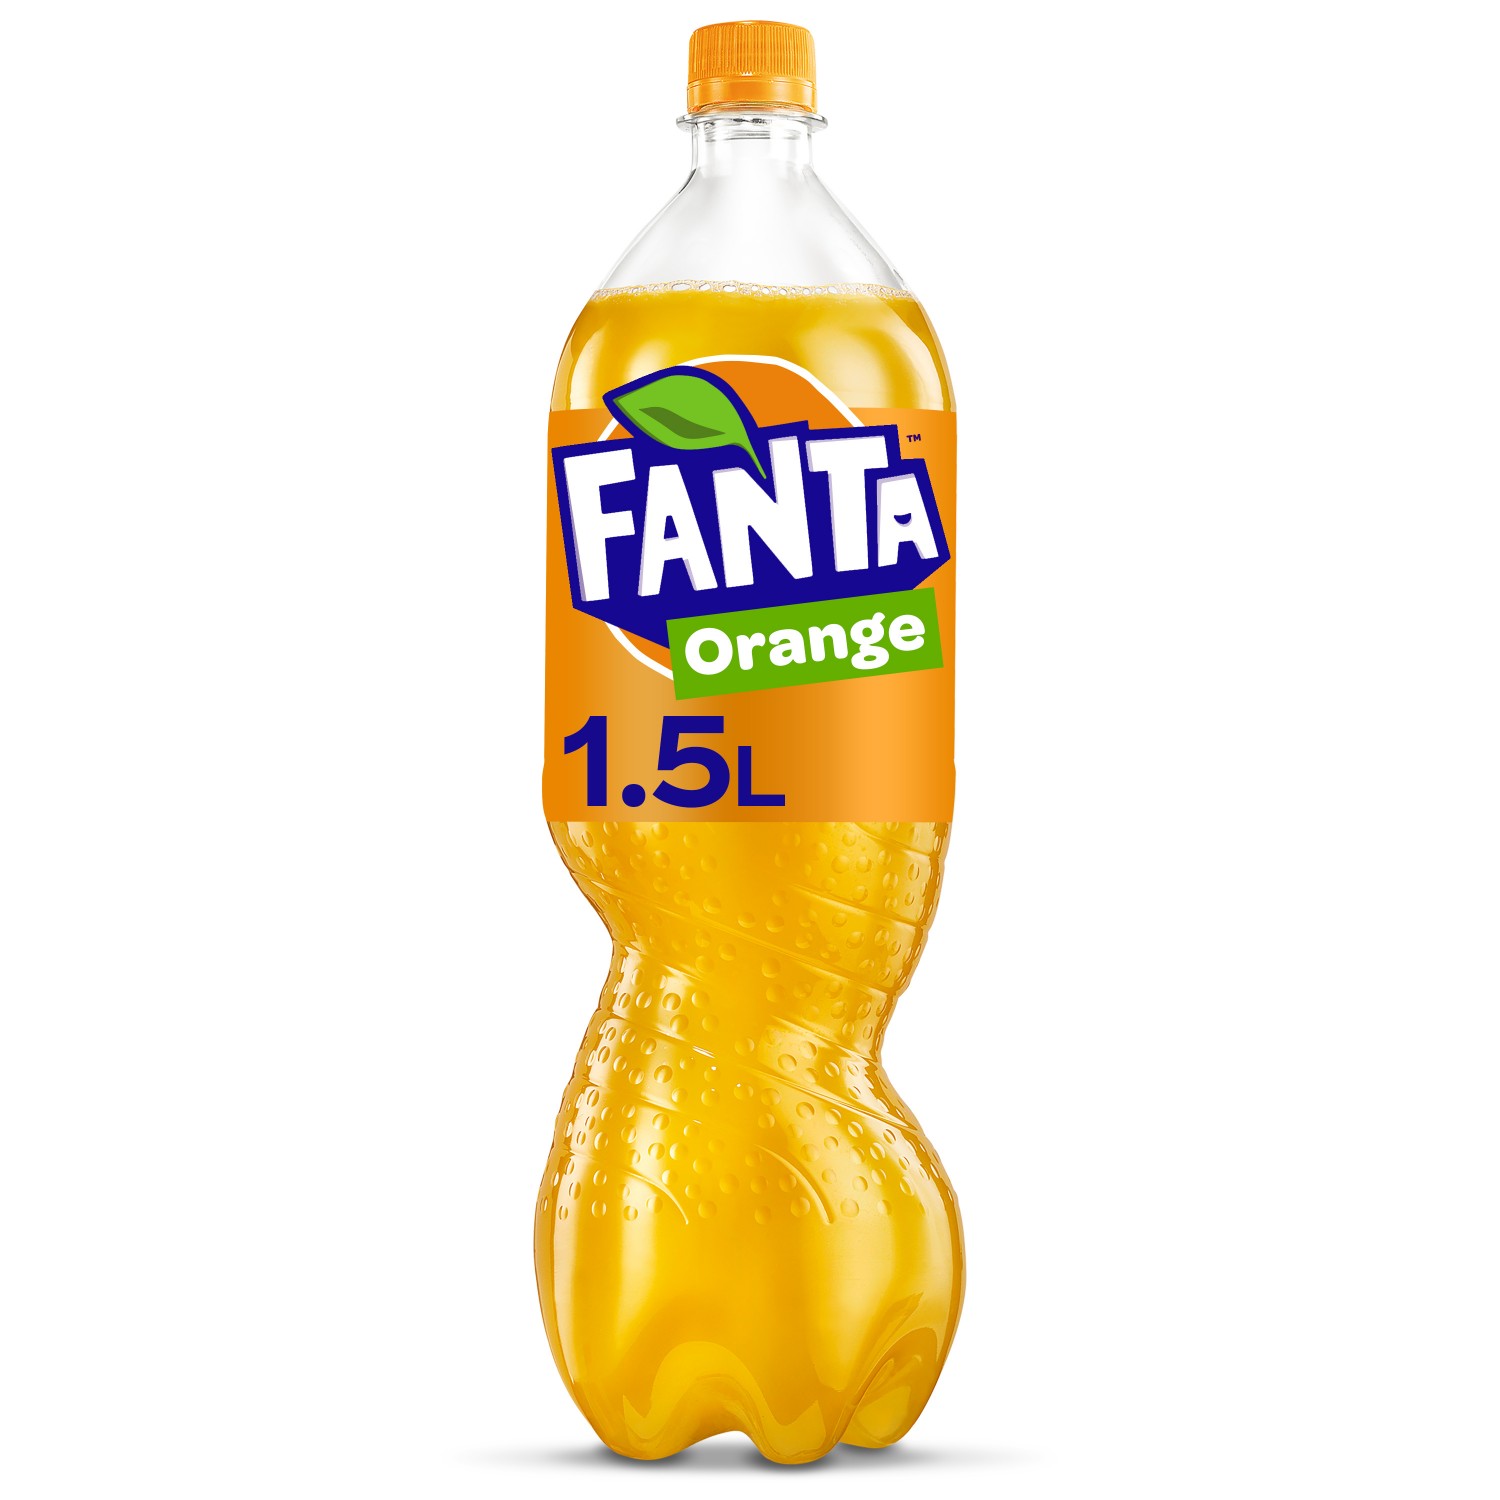 FANTA Orange